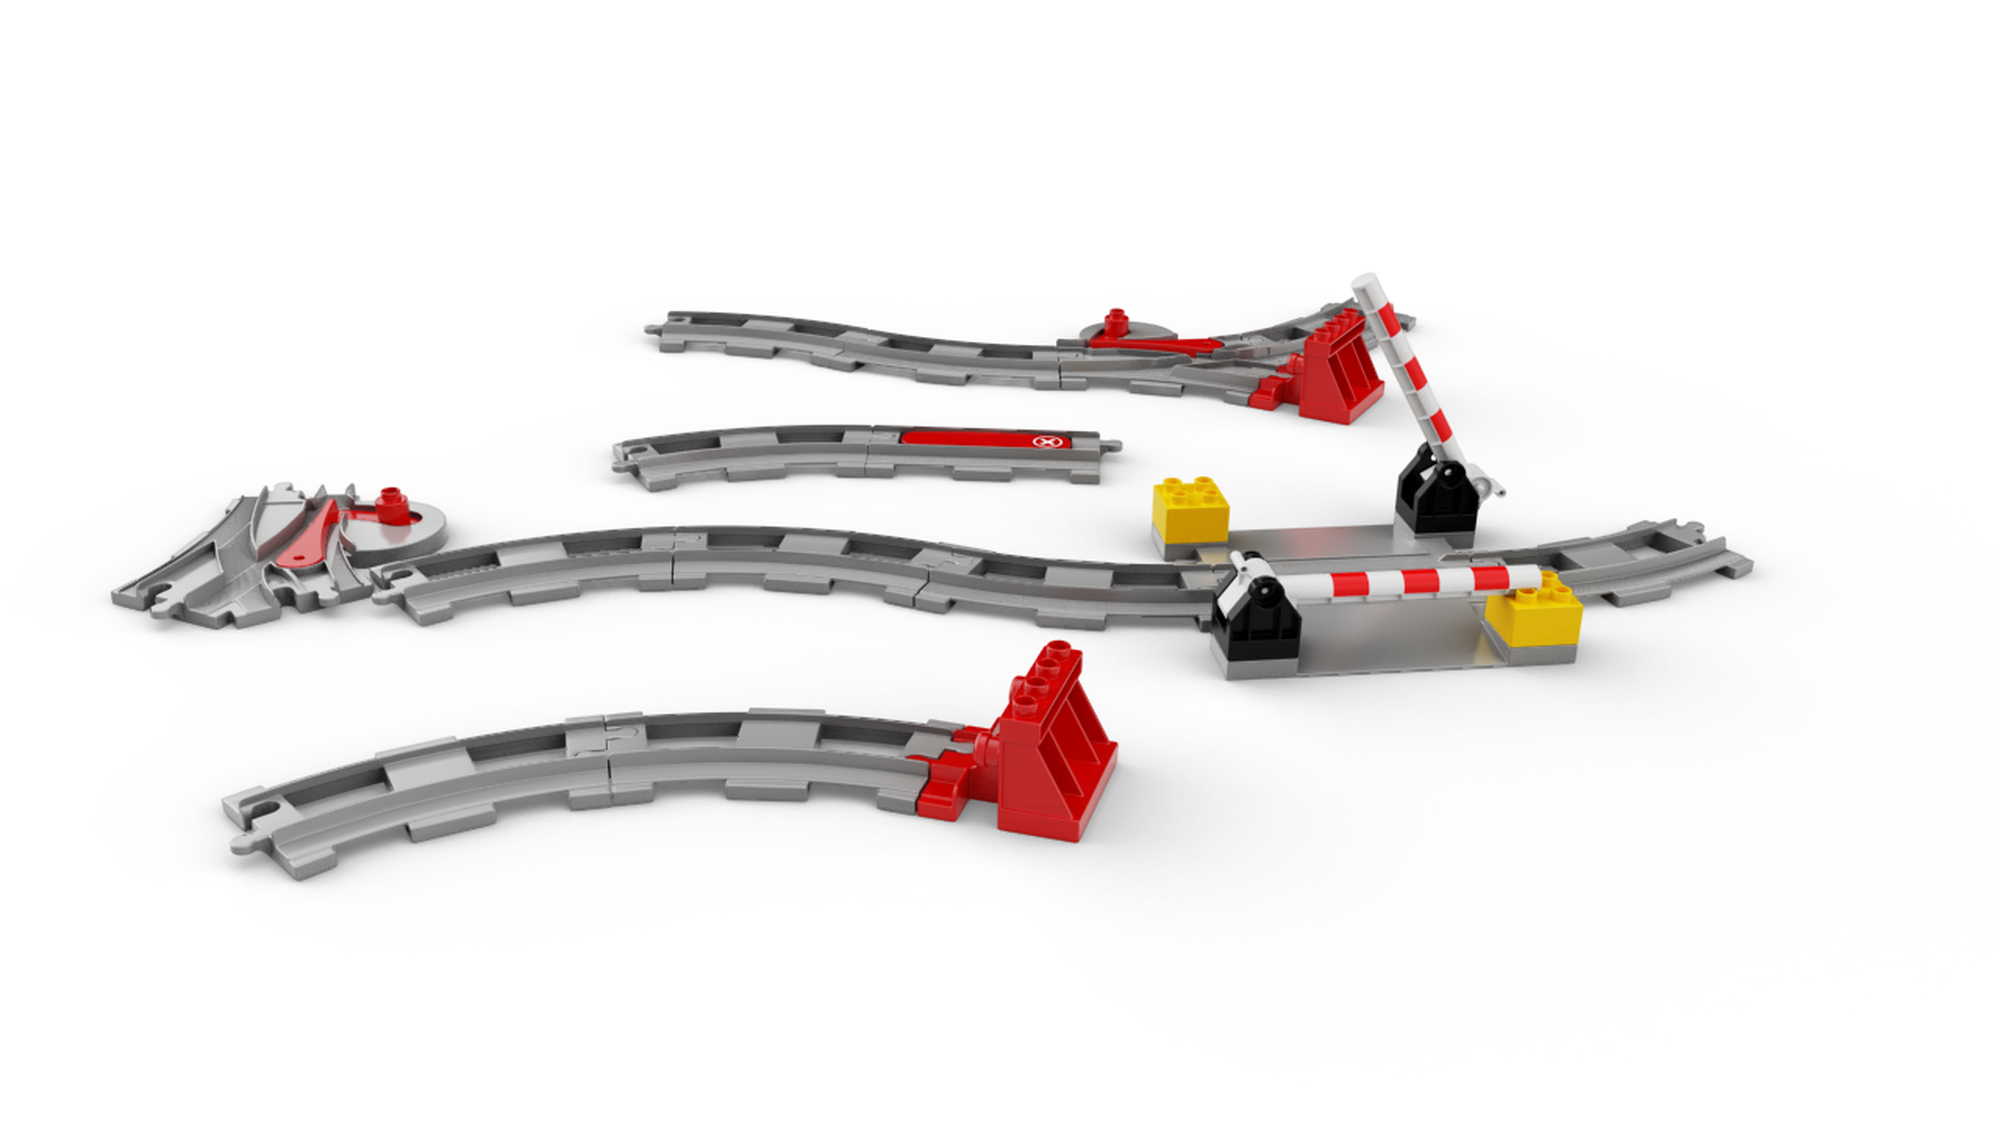 Lego Duplo Train Tracks Railway Set with Action Brick 10882 Ages 2